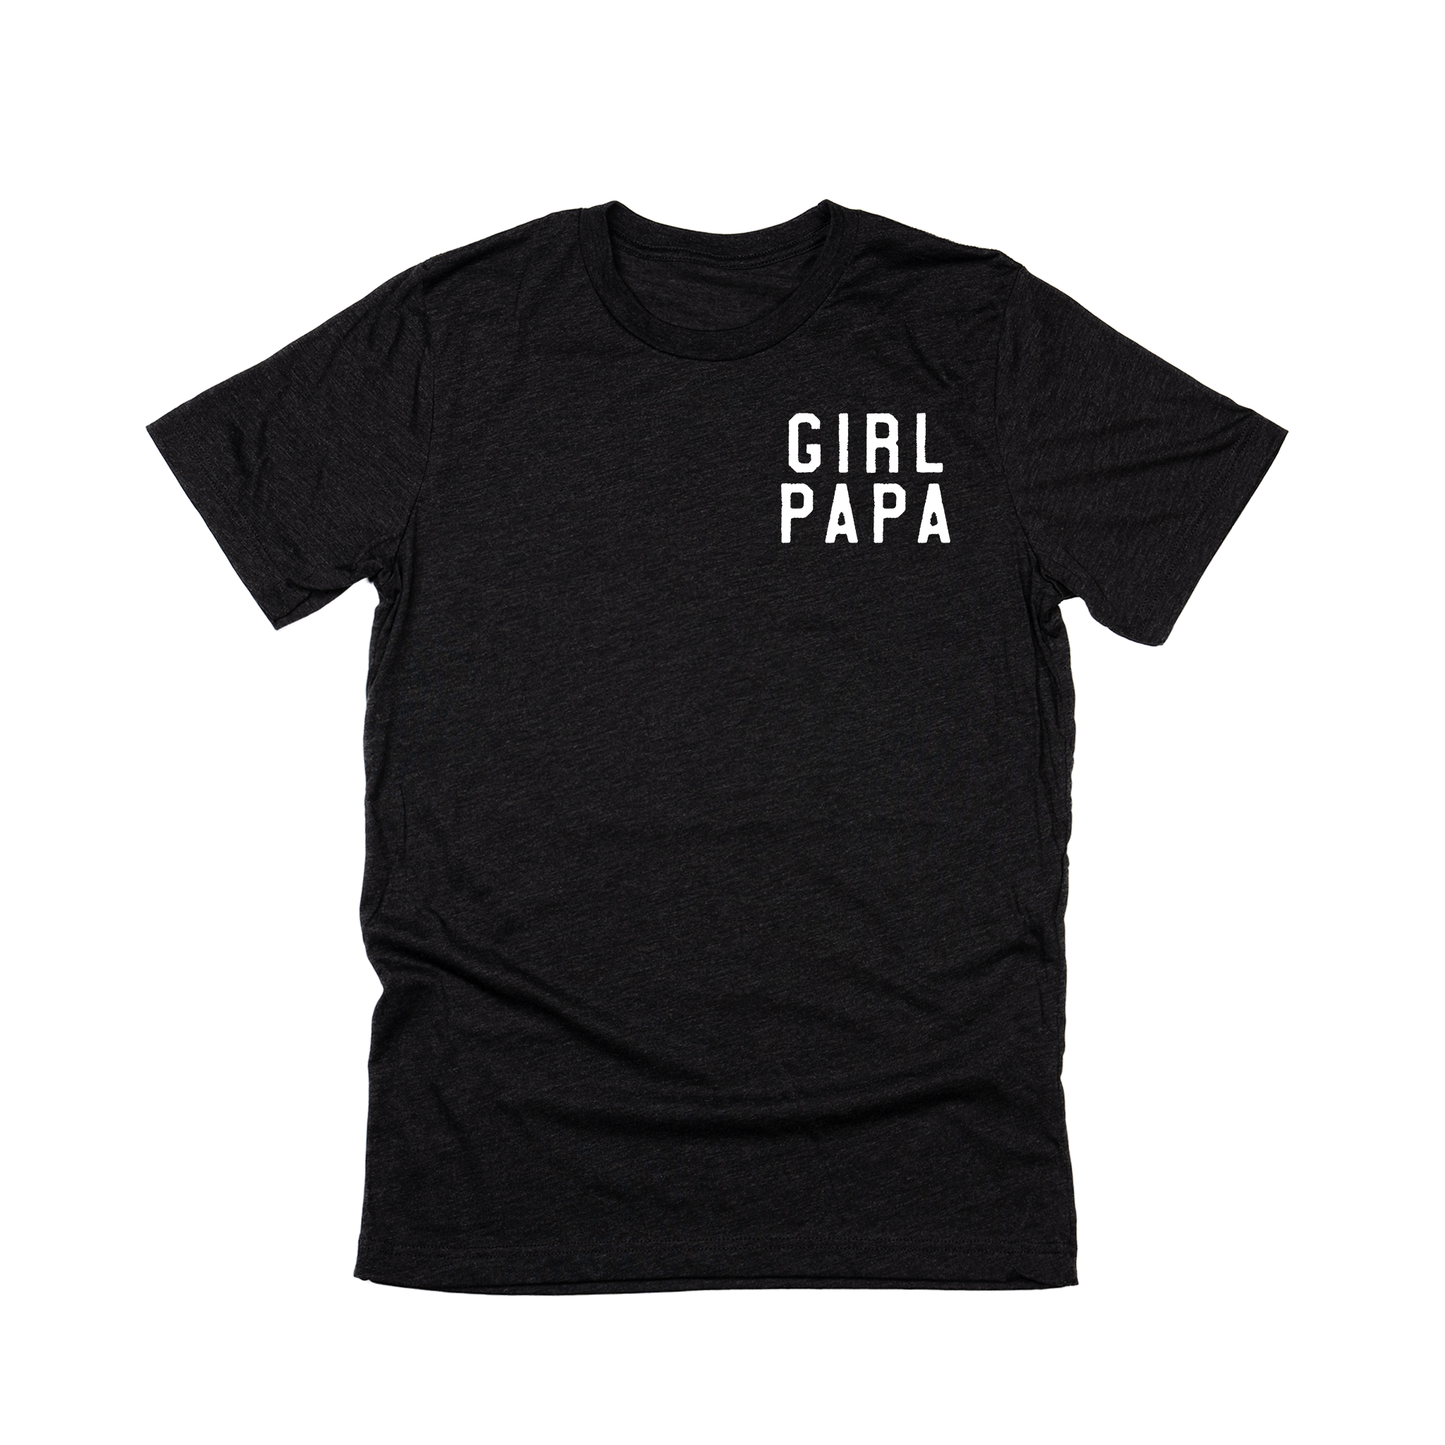 Girl Papa (Pocket, White) - Tee (Charcoal Black)